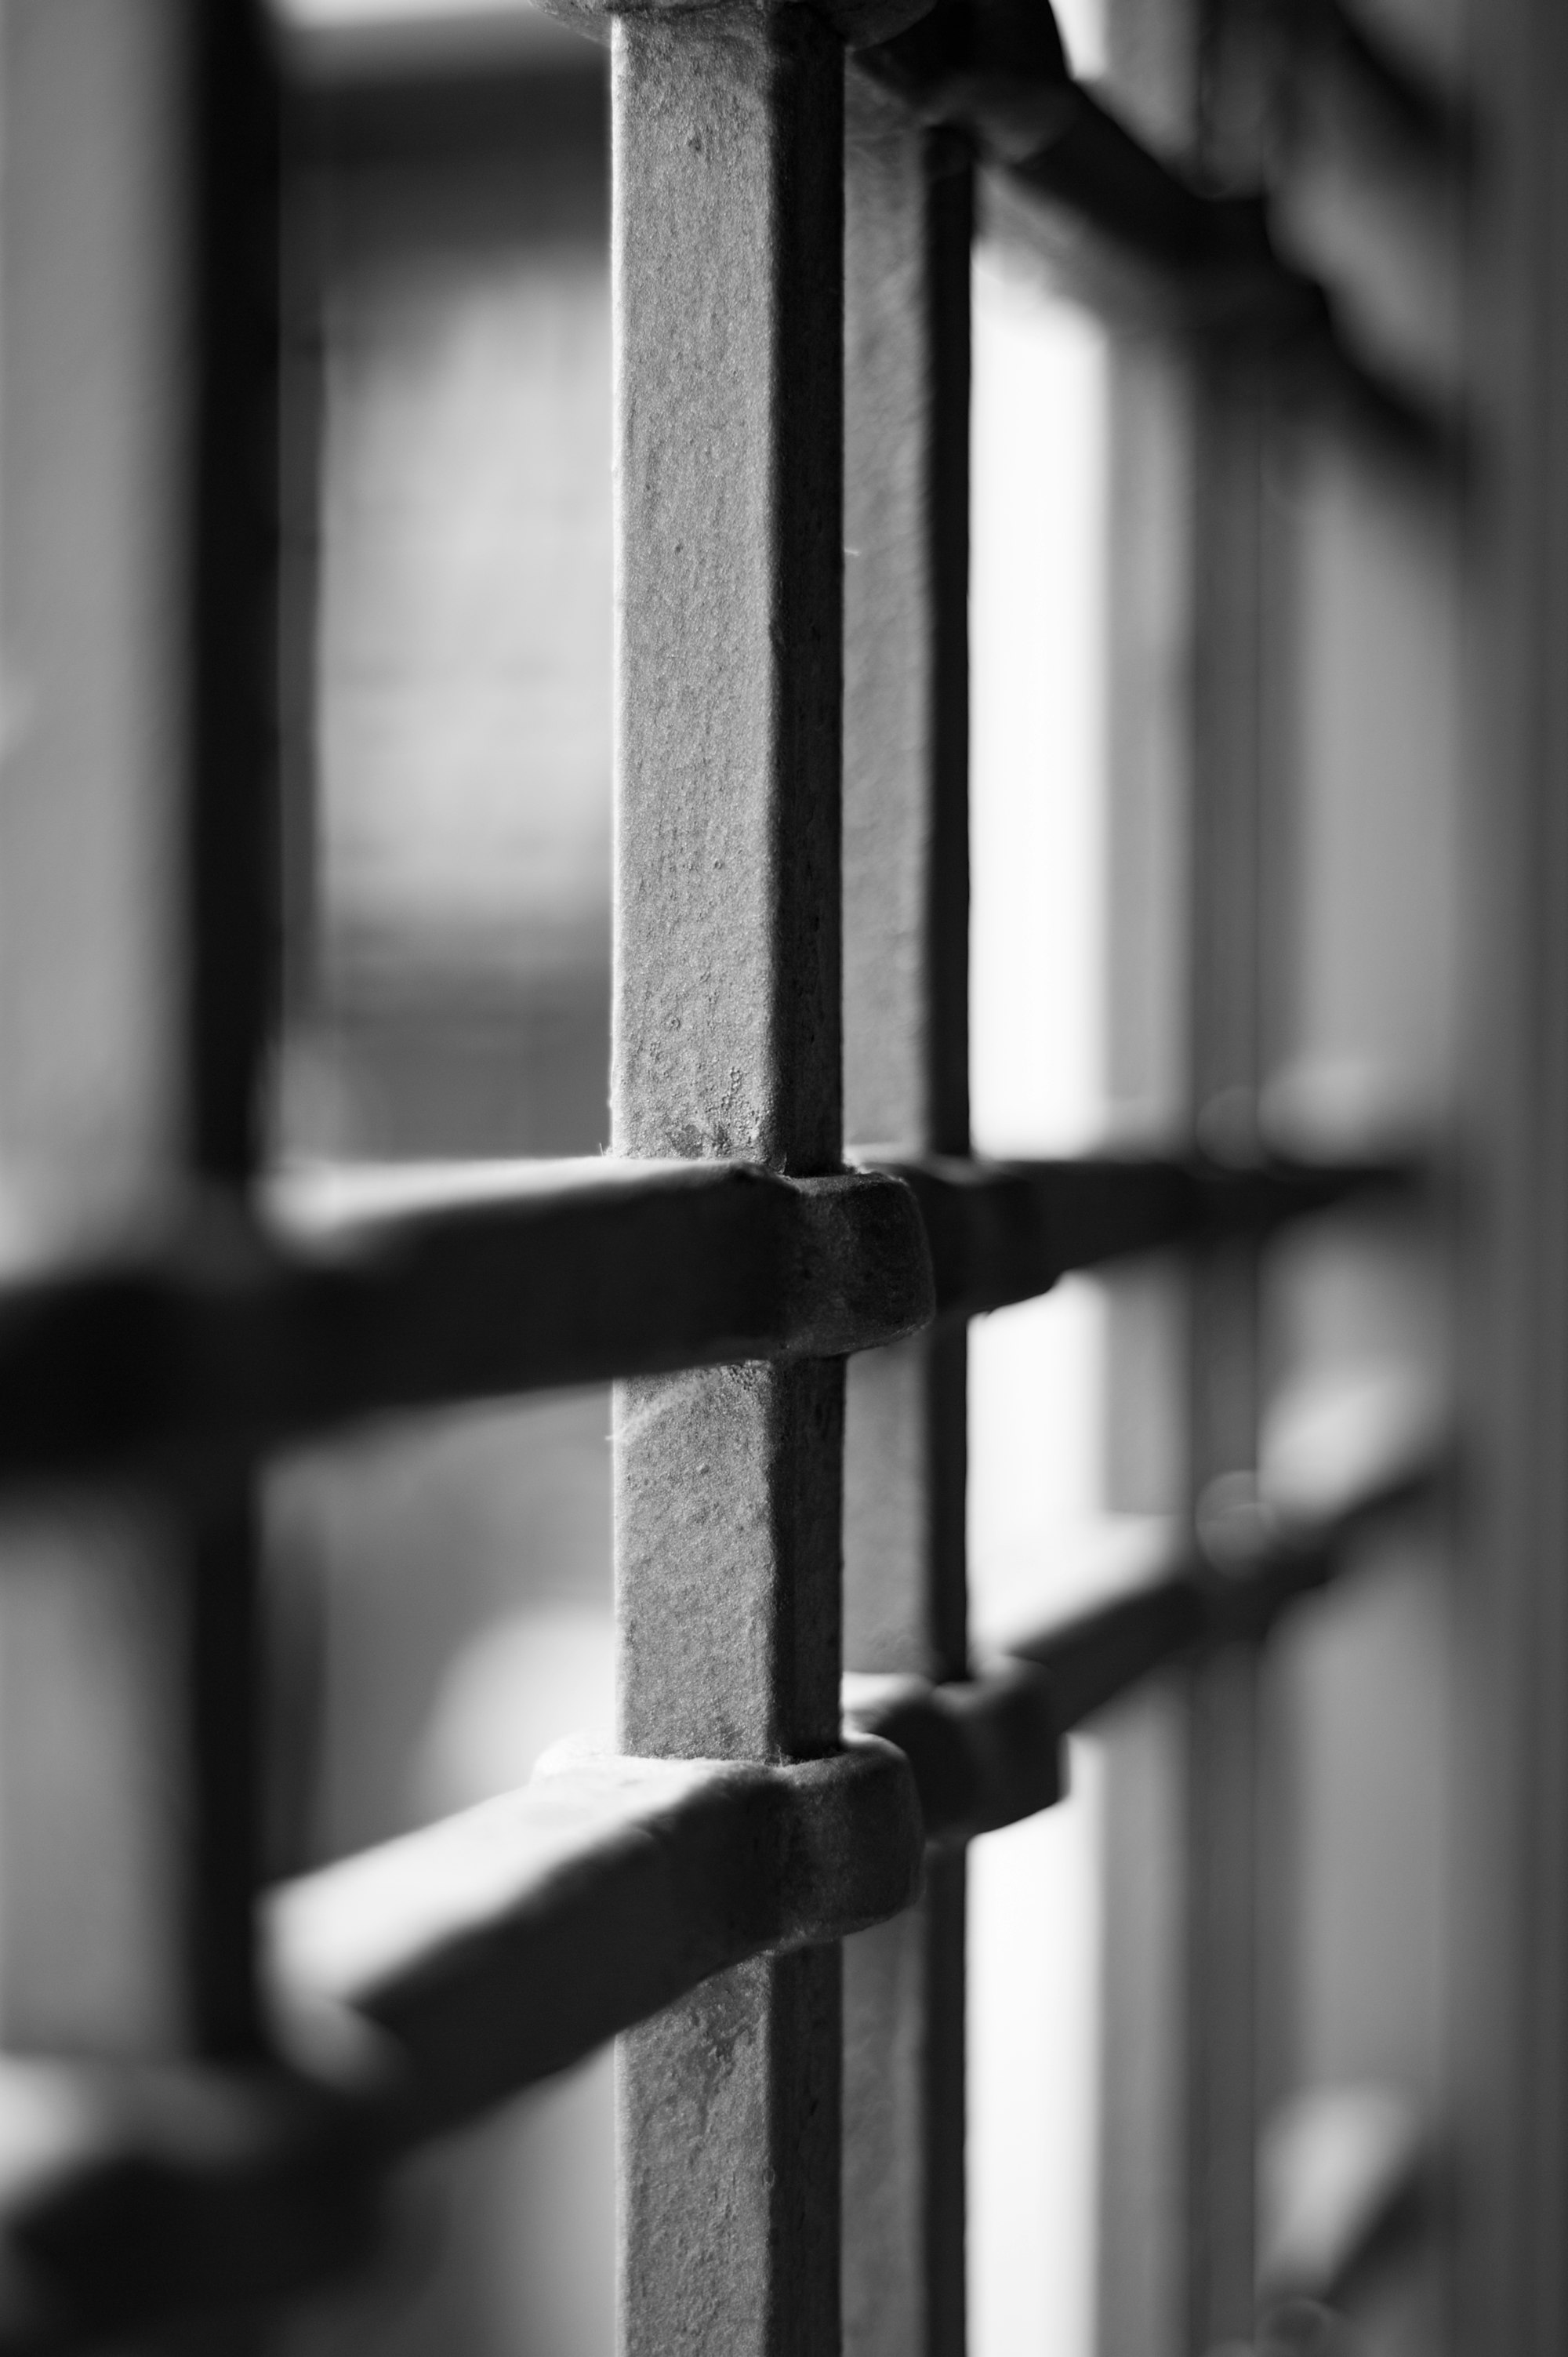 Centring male prisoners demands in women's jails